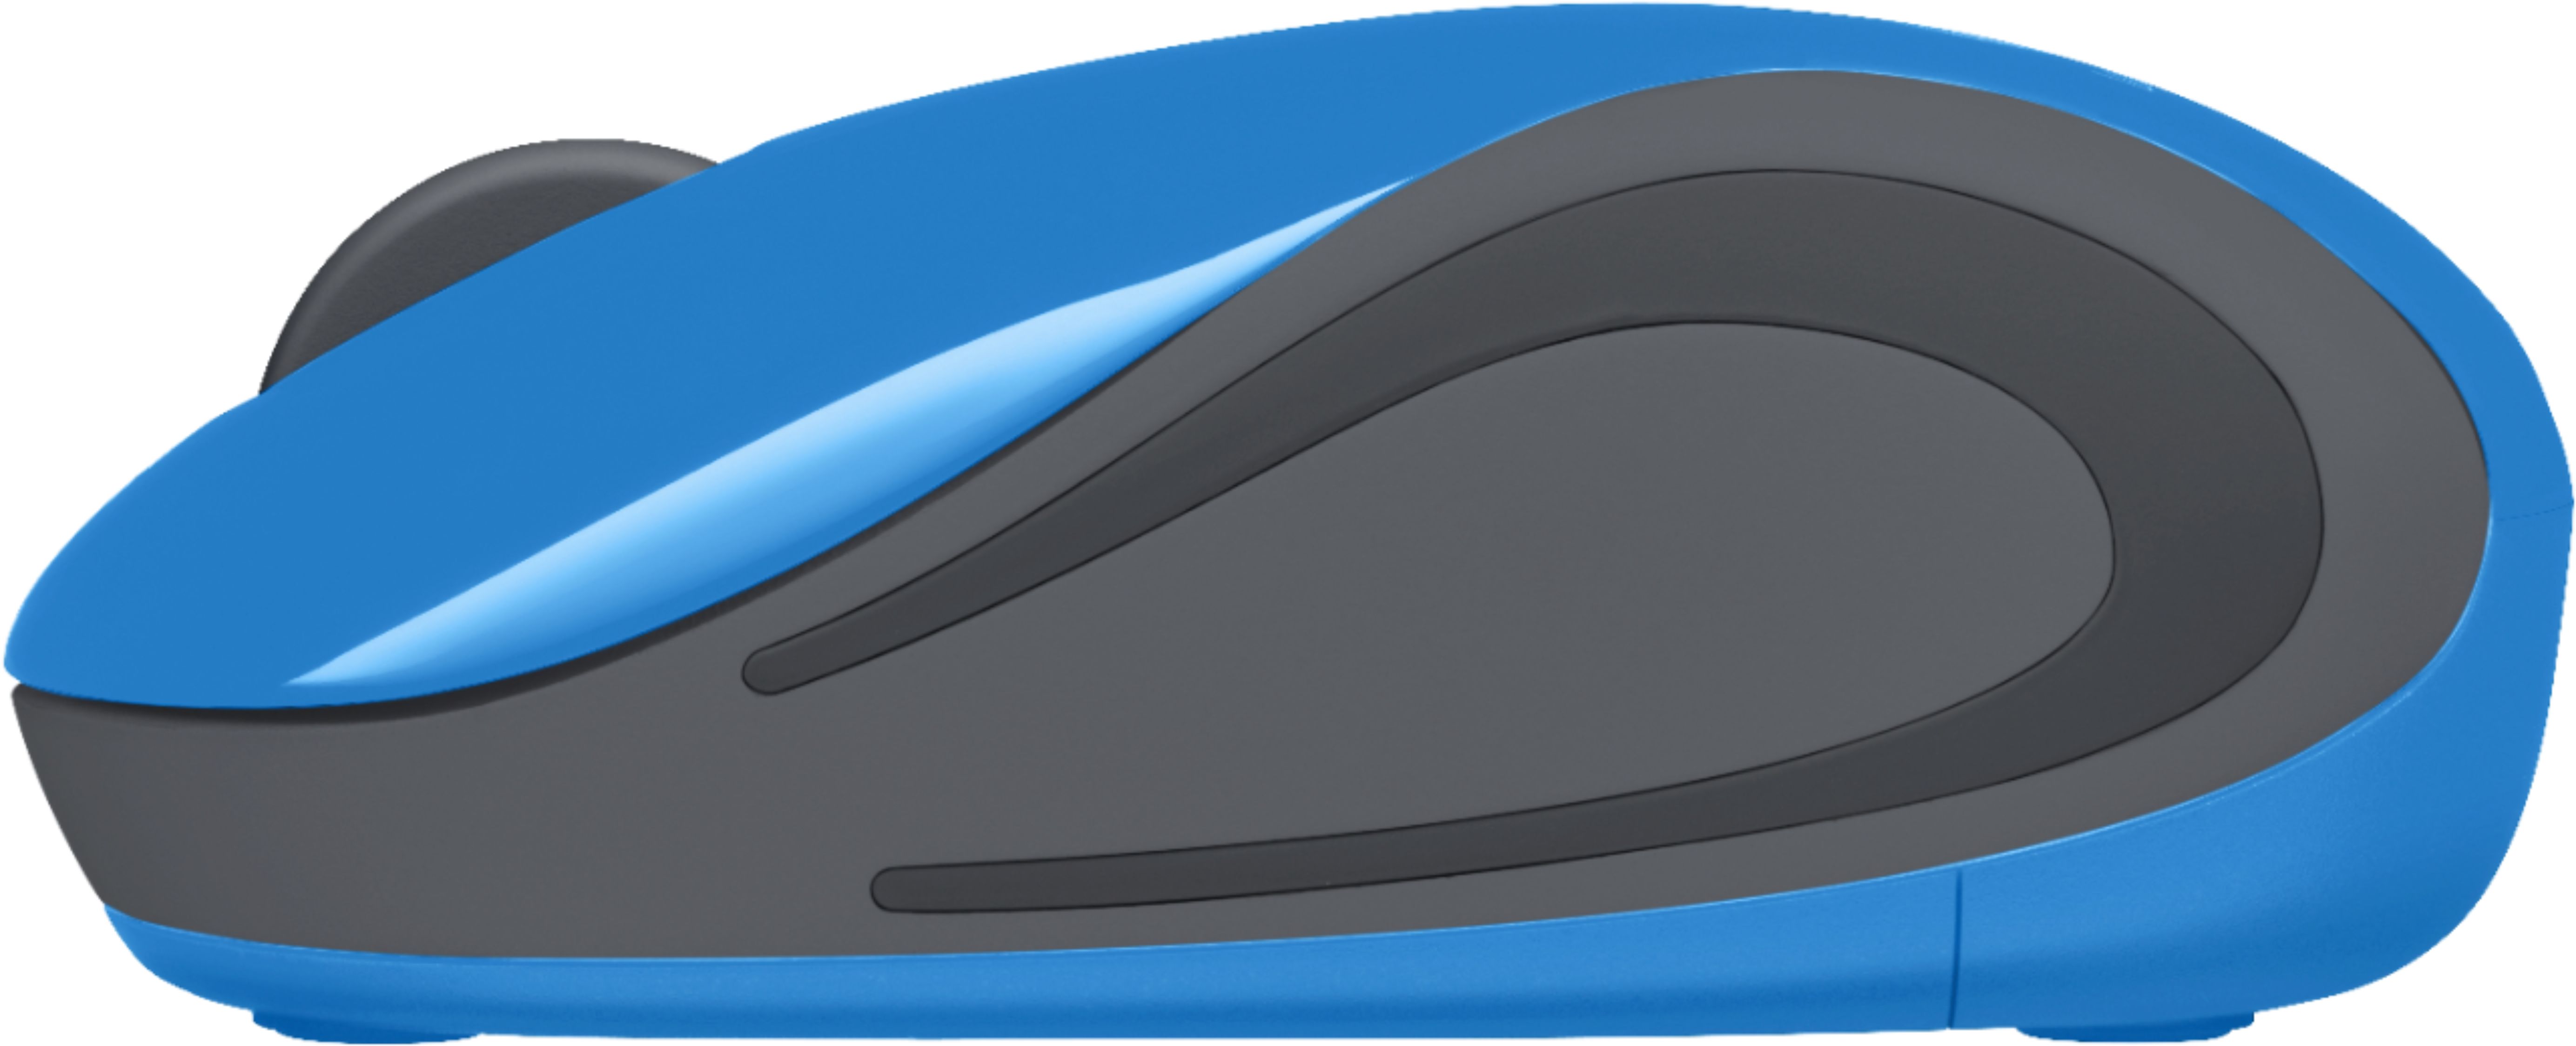 Mini Buy: Logitech Mouse Ambidextrous Optical Blue-gray Best 910-002728 Wireless M187